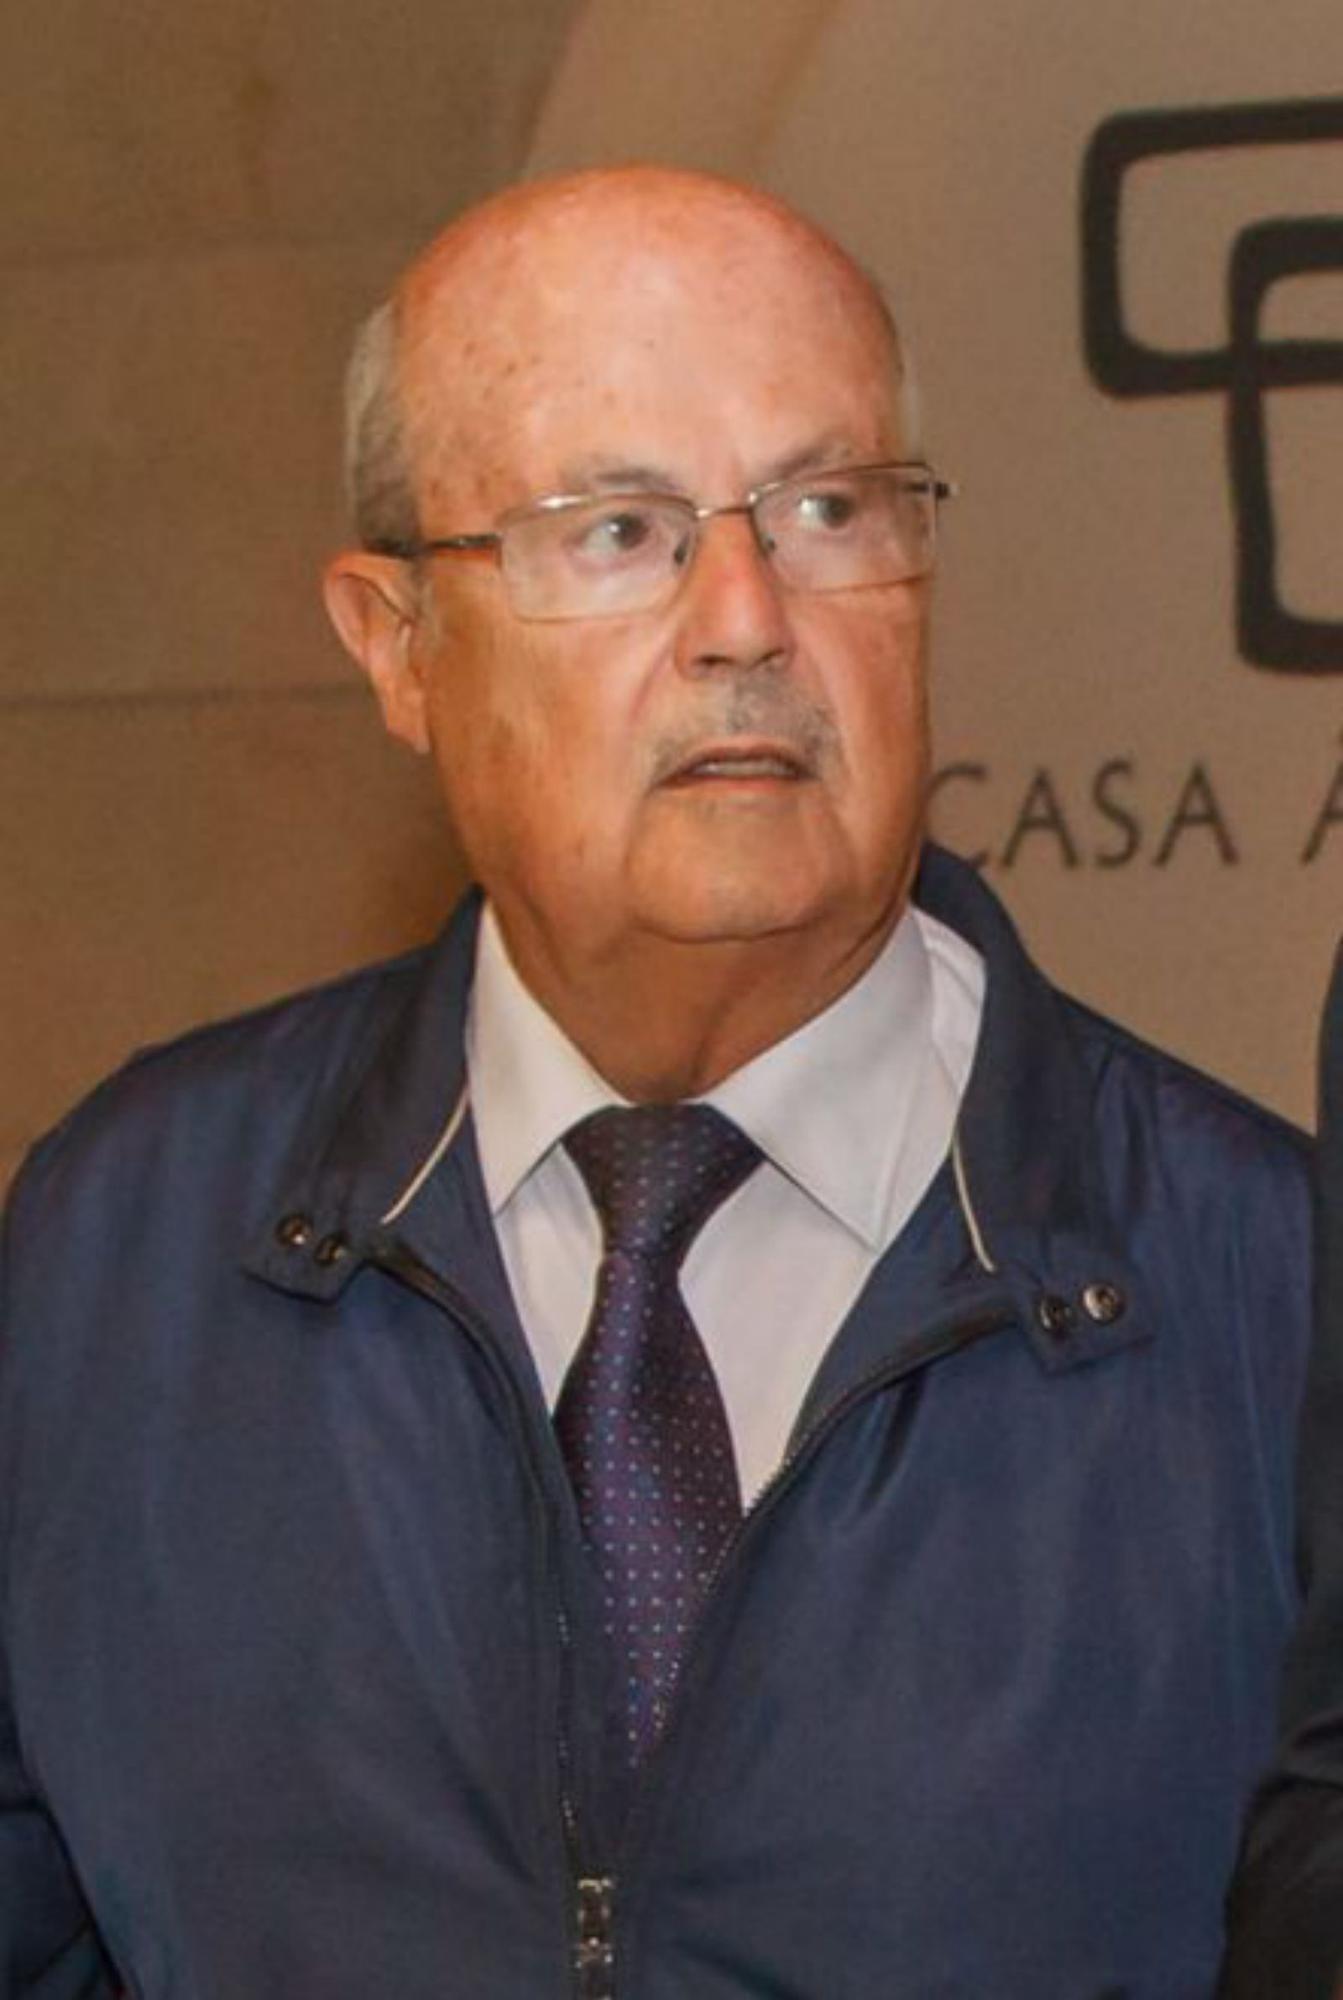 José Segura